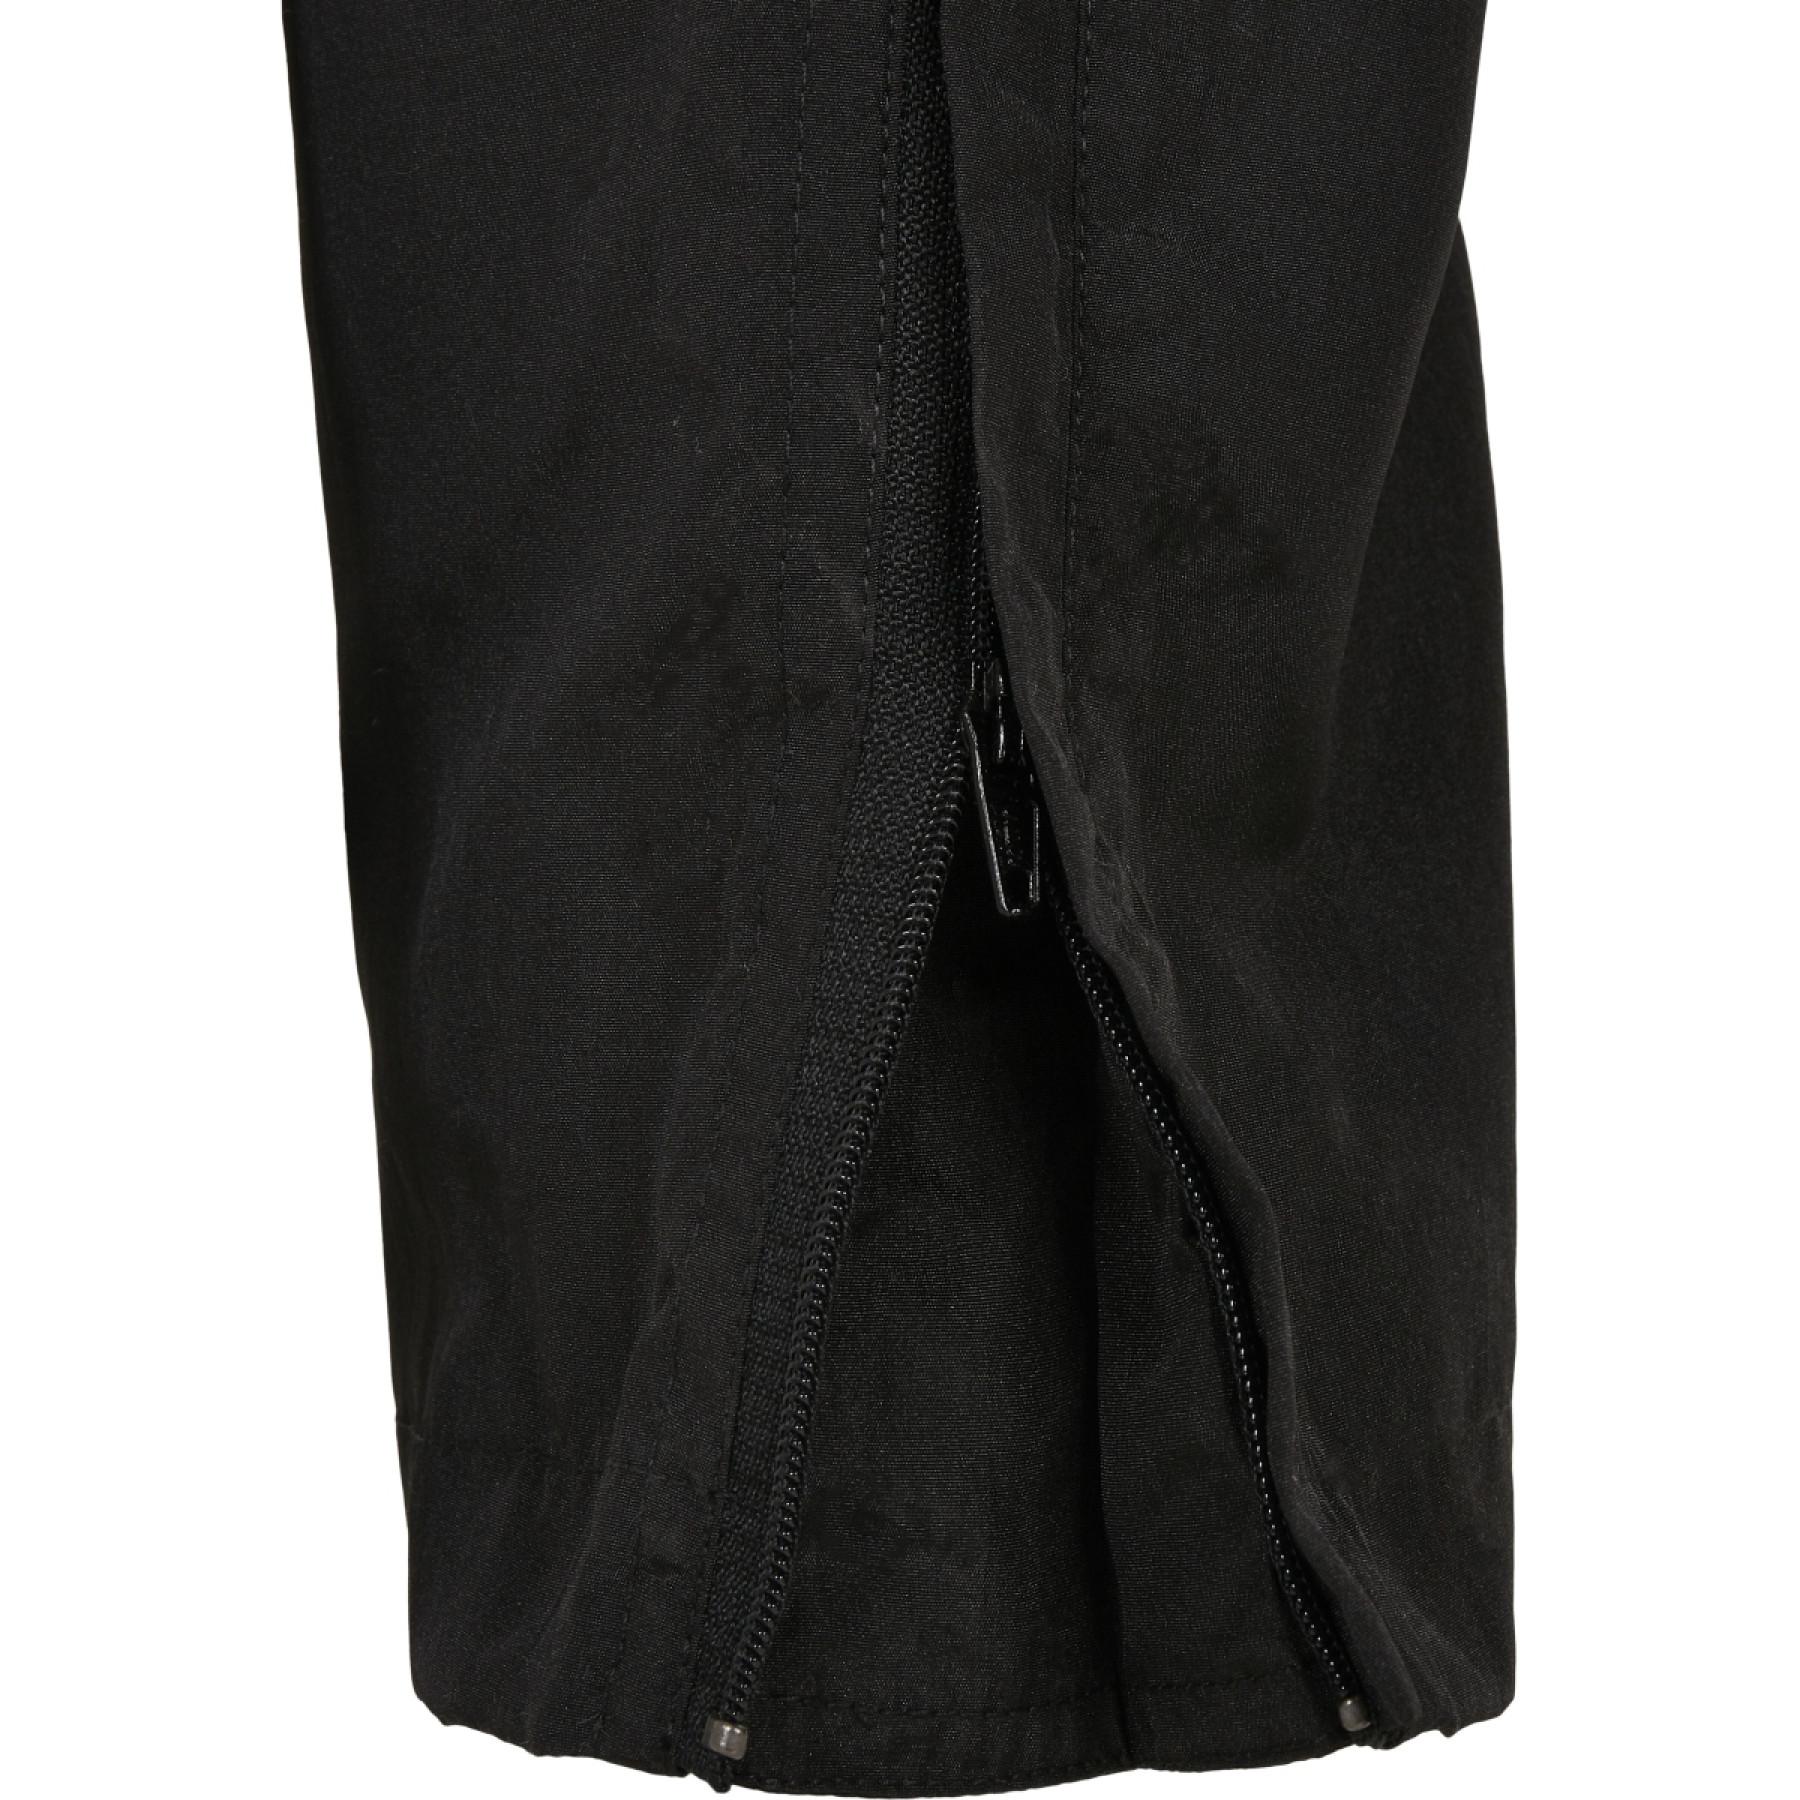 Women's trousers Urban Classics shiny crinkle nylon zip